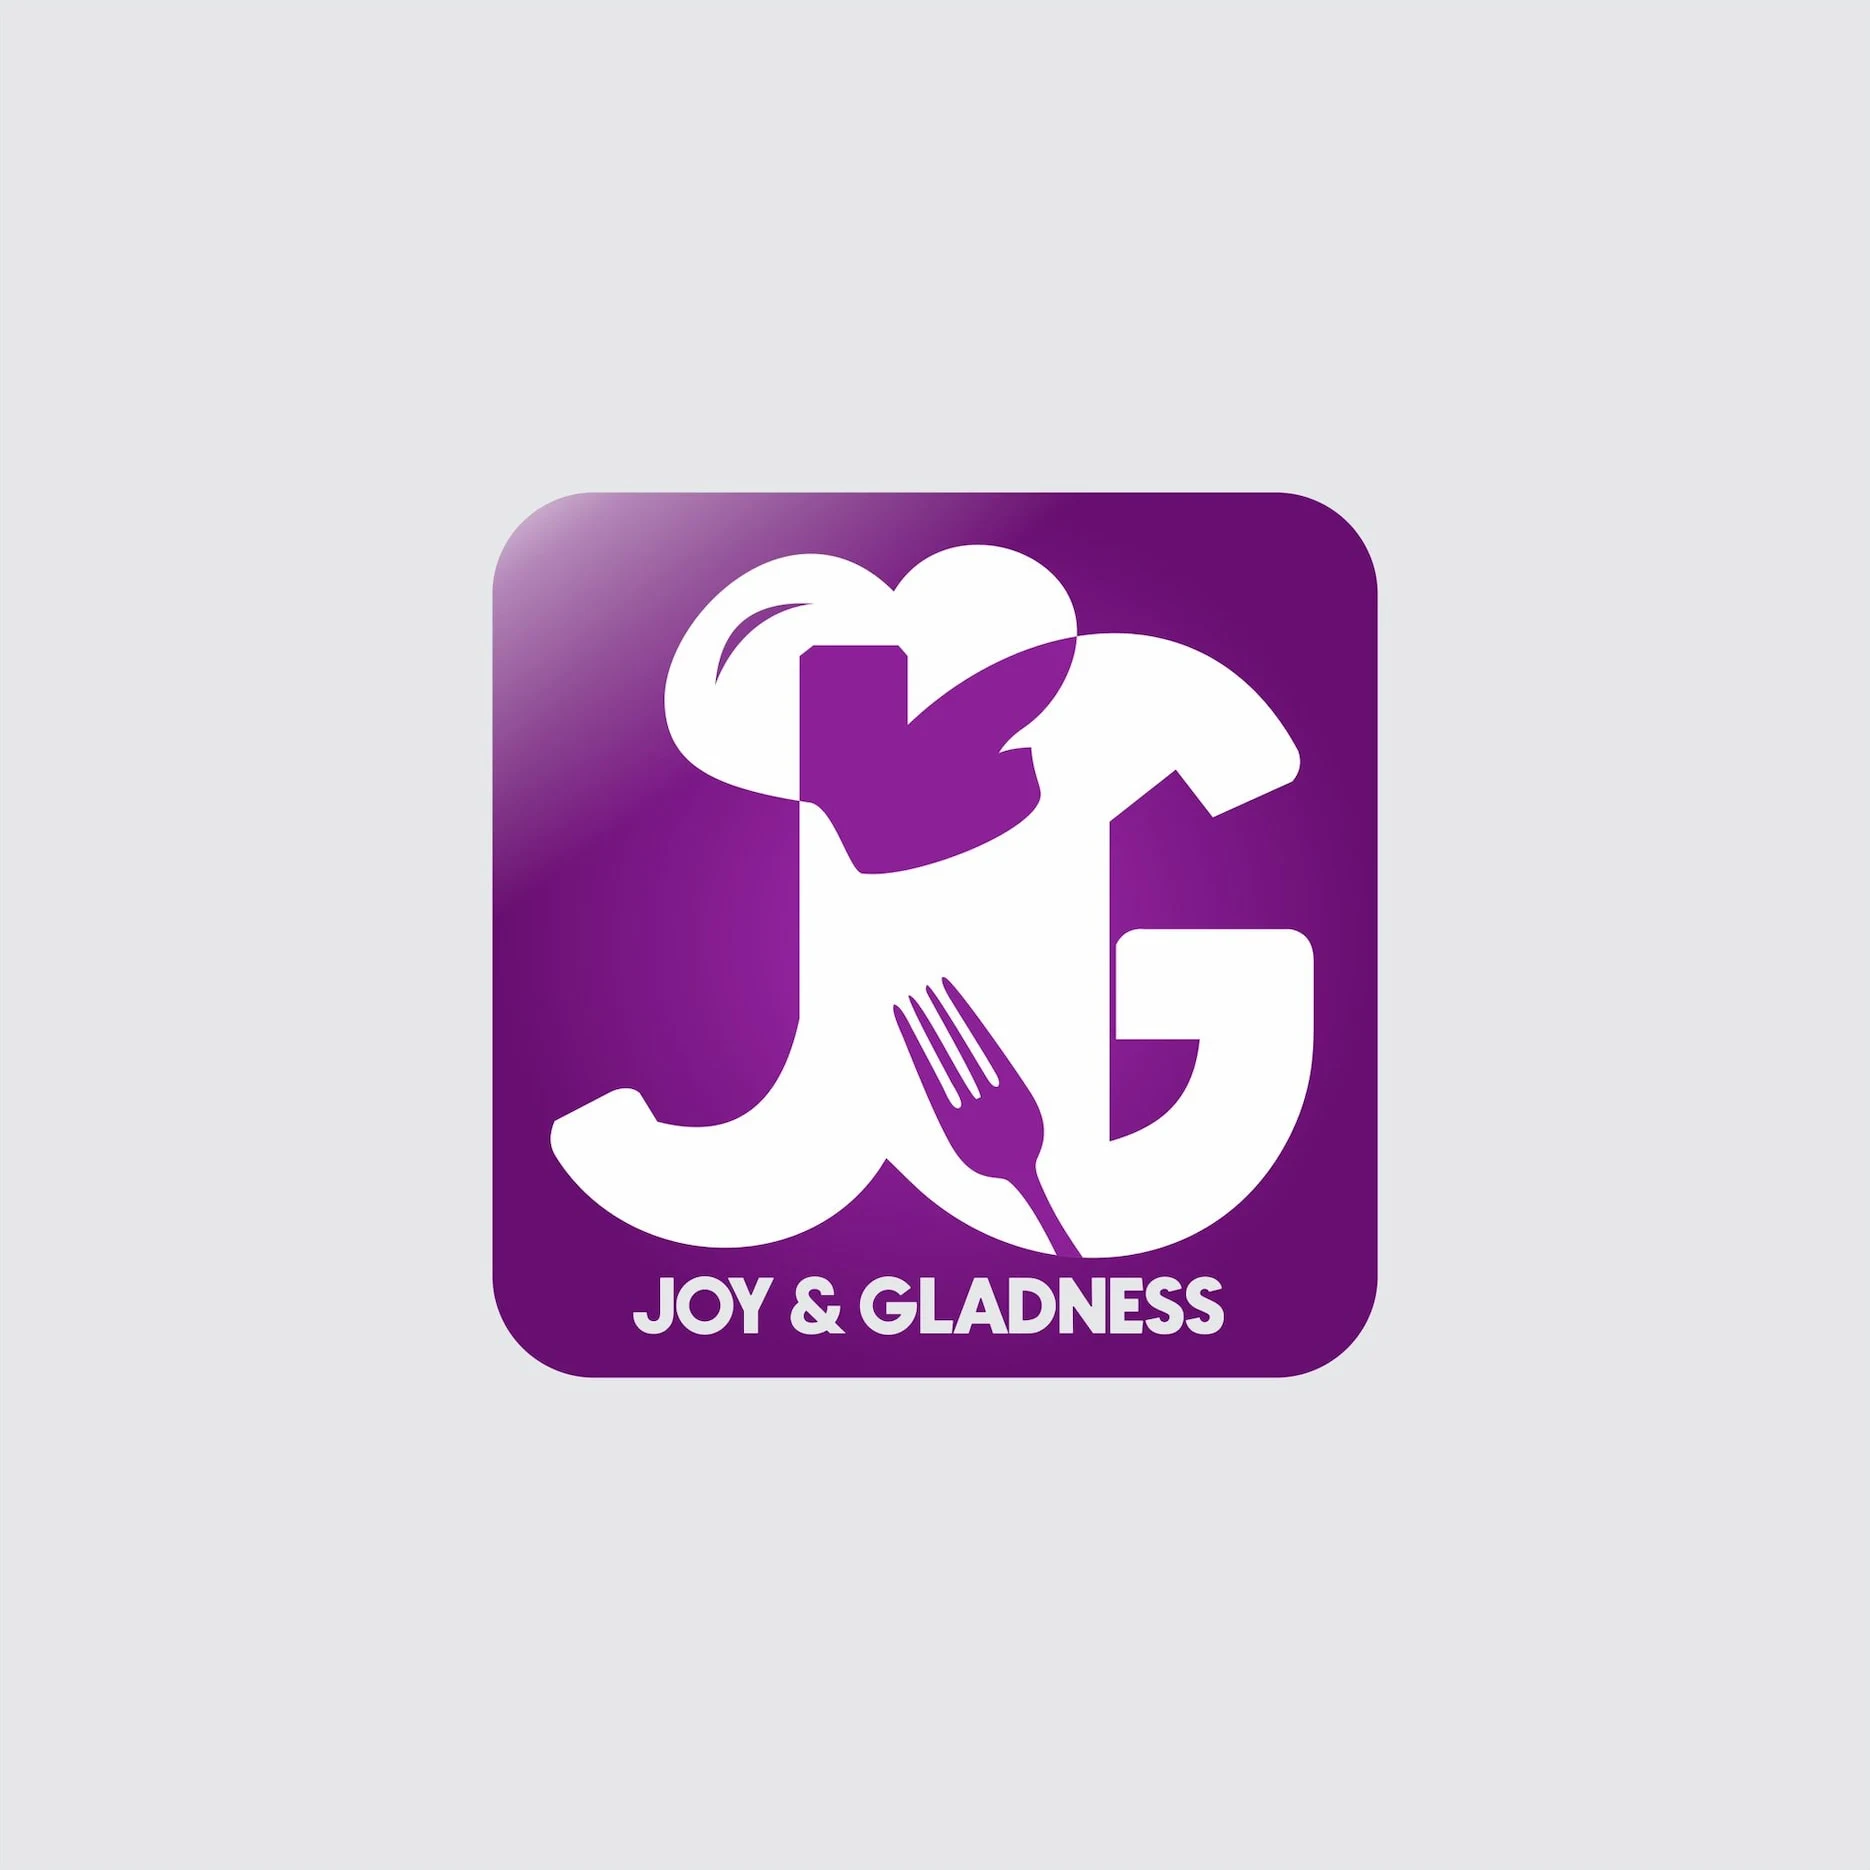 LOGO Joy & Gladness Ltd London 07511 646809